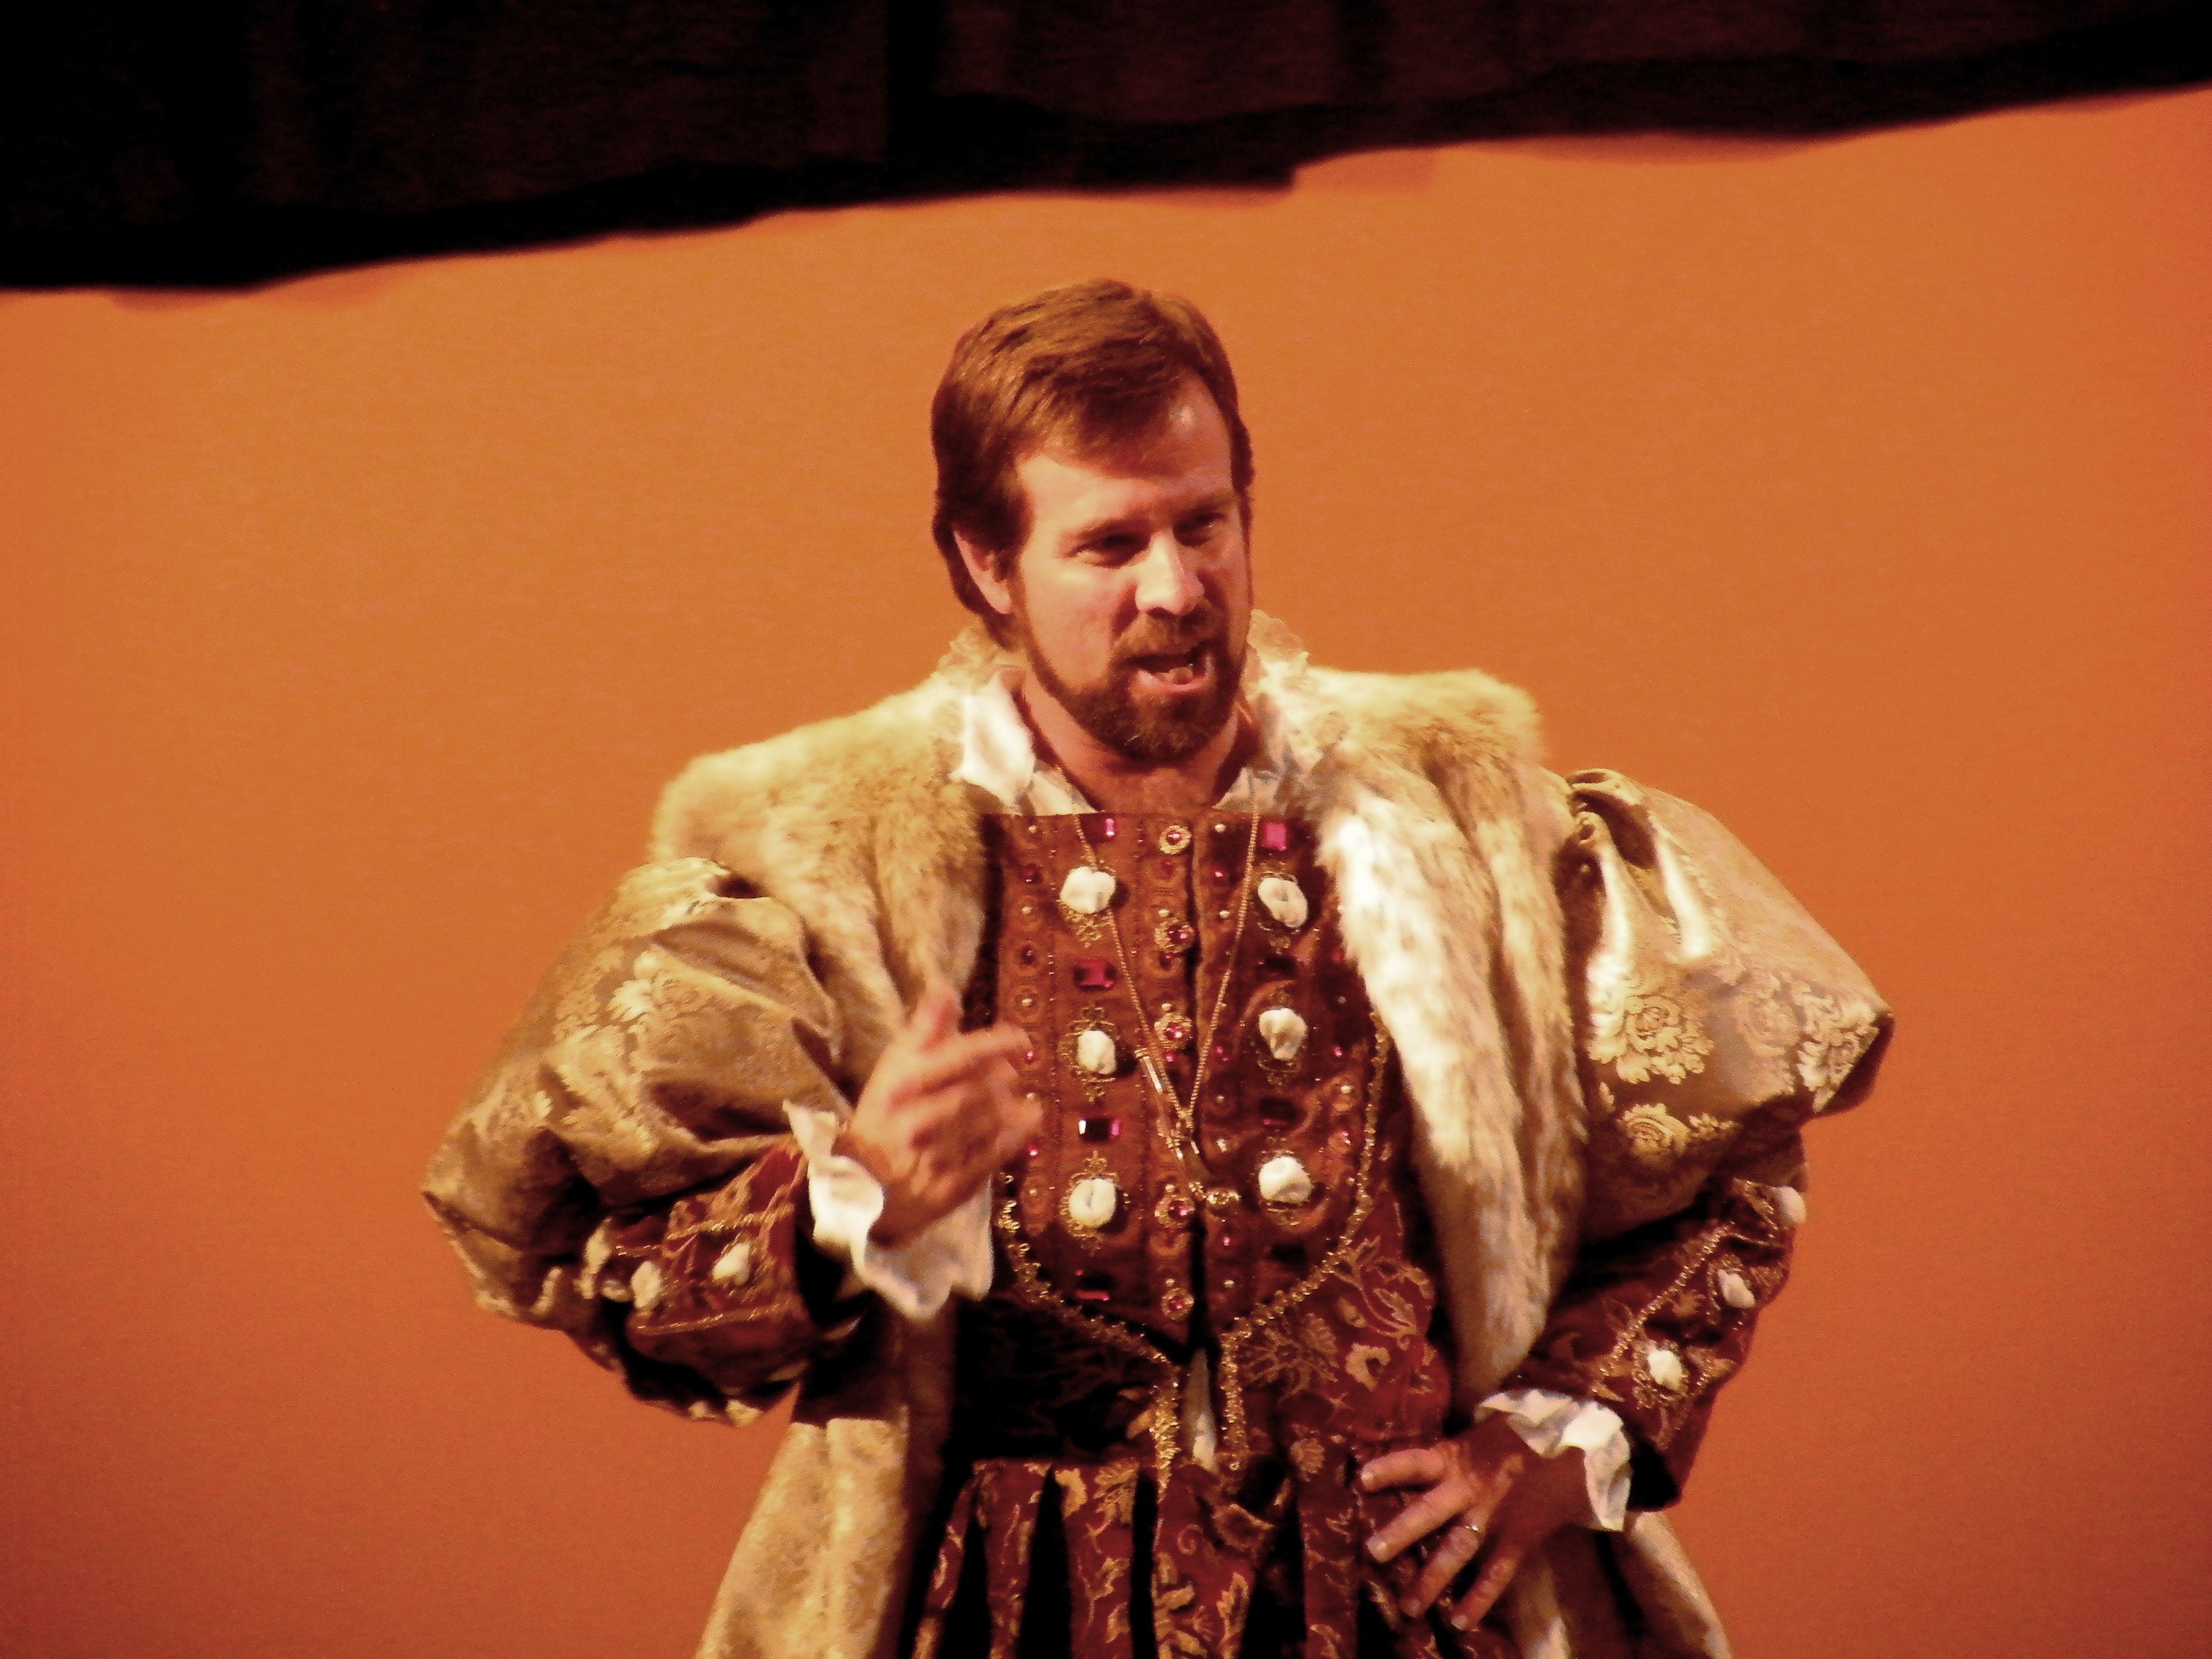 Scott Rollins as King Henry VIII in A MAN FOR ALL SEASONS Va Beach, VA